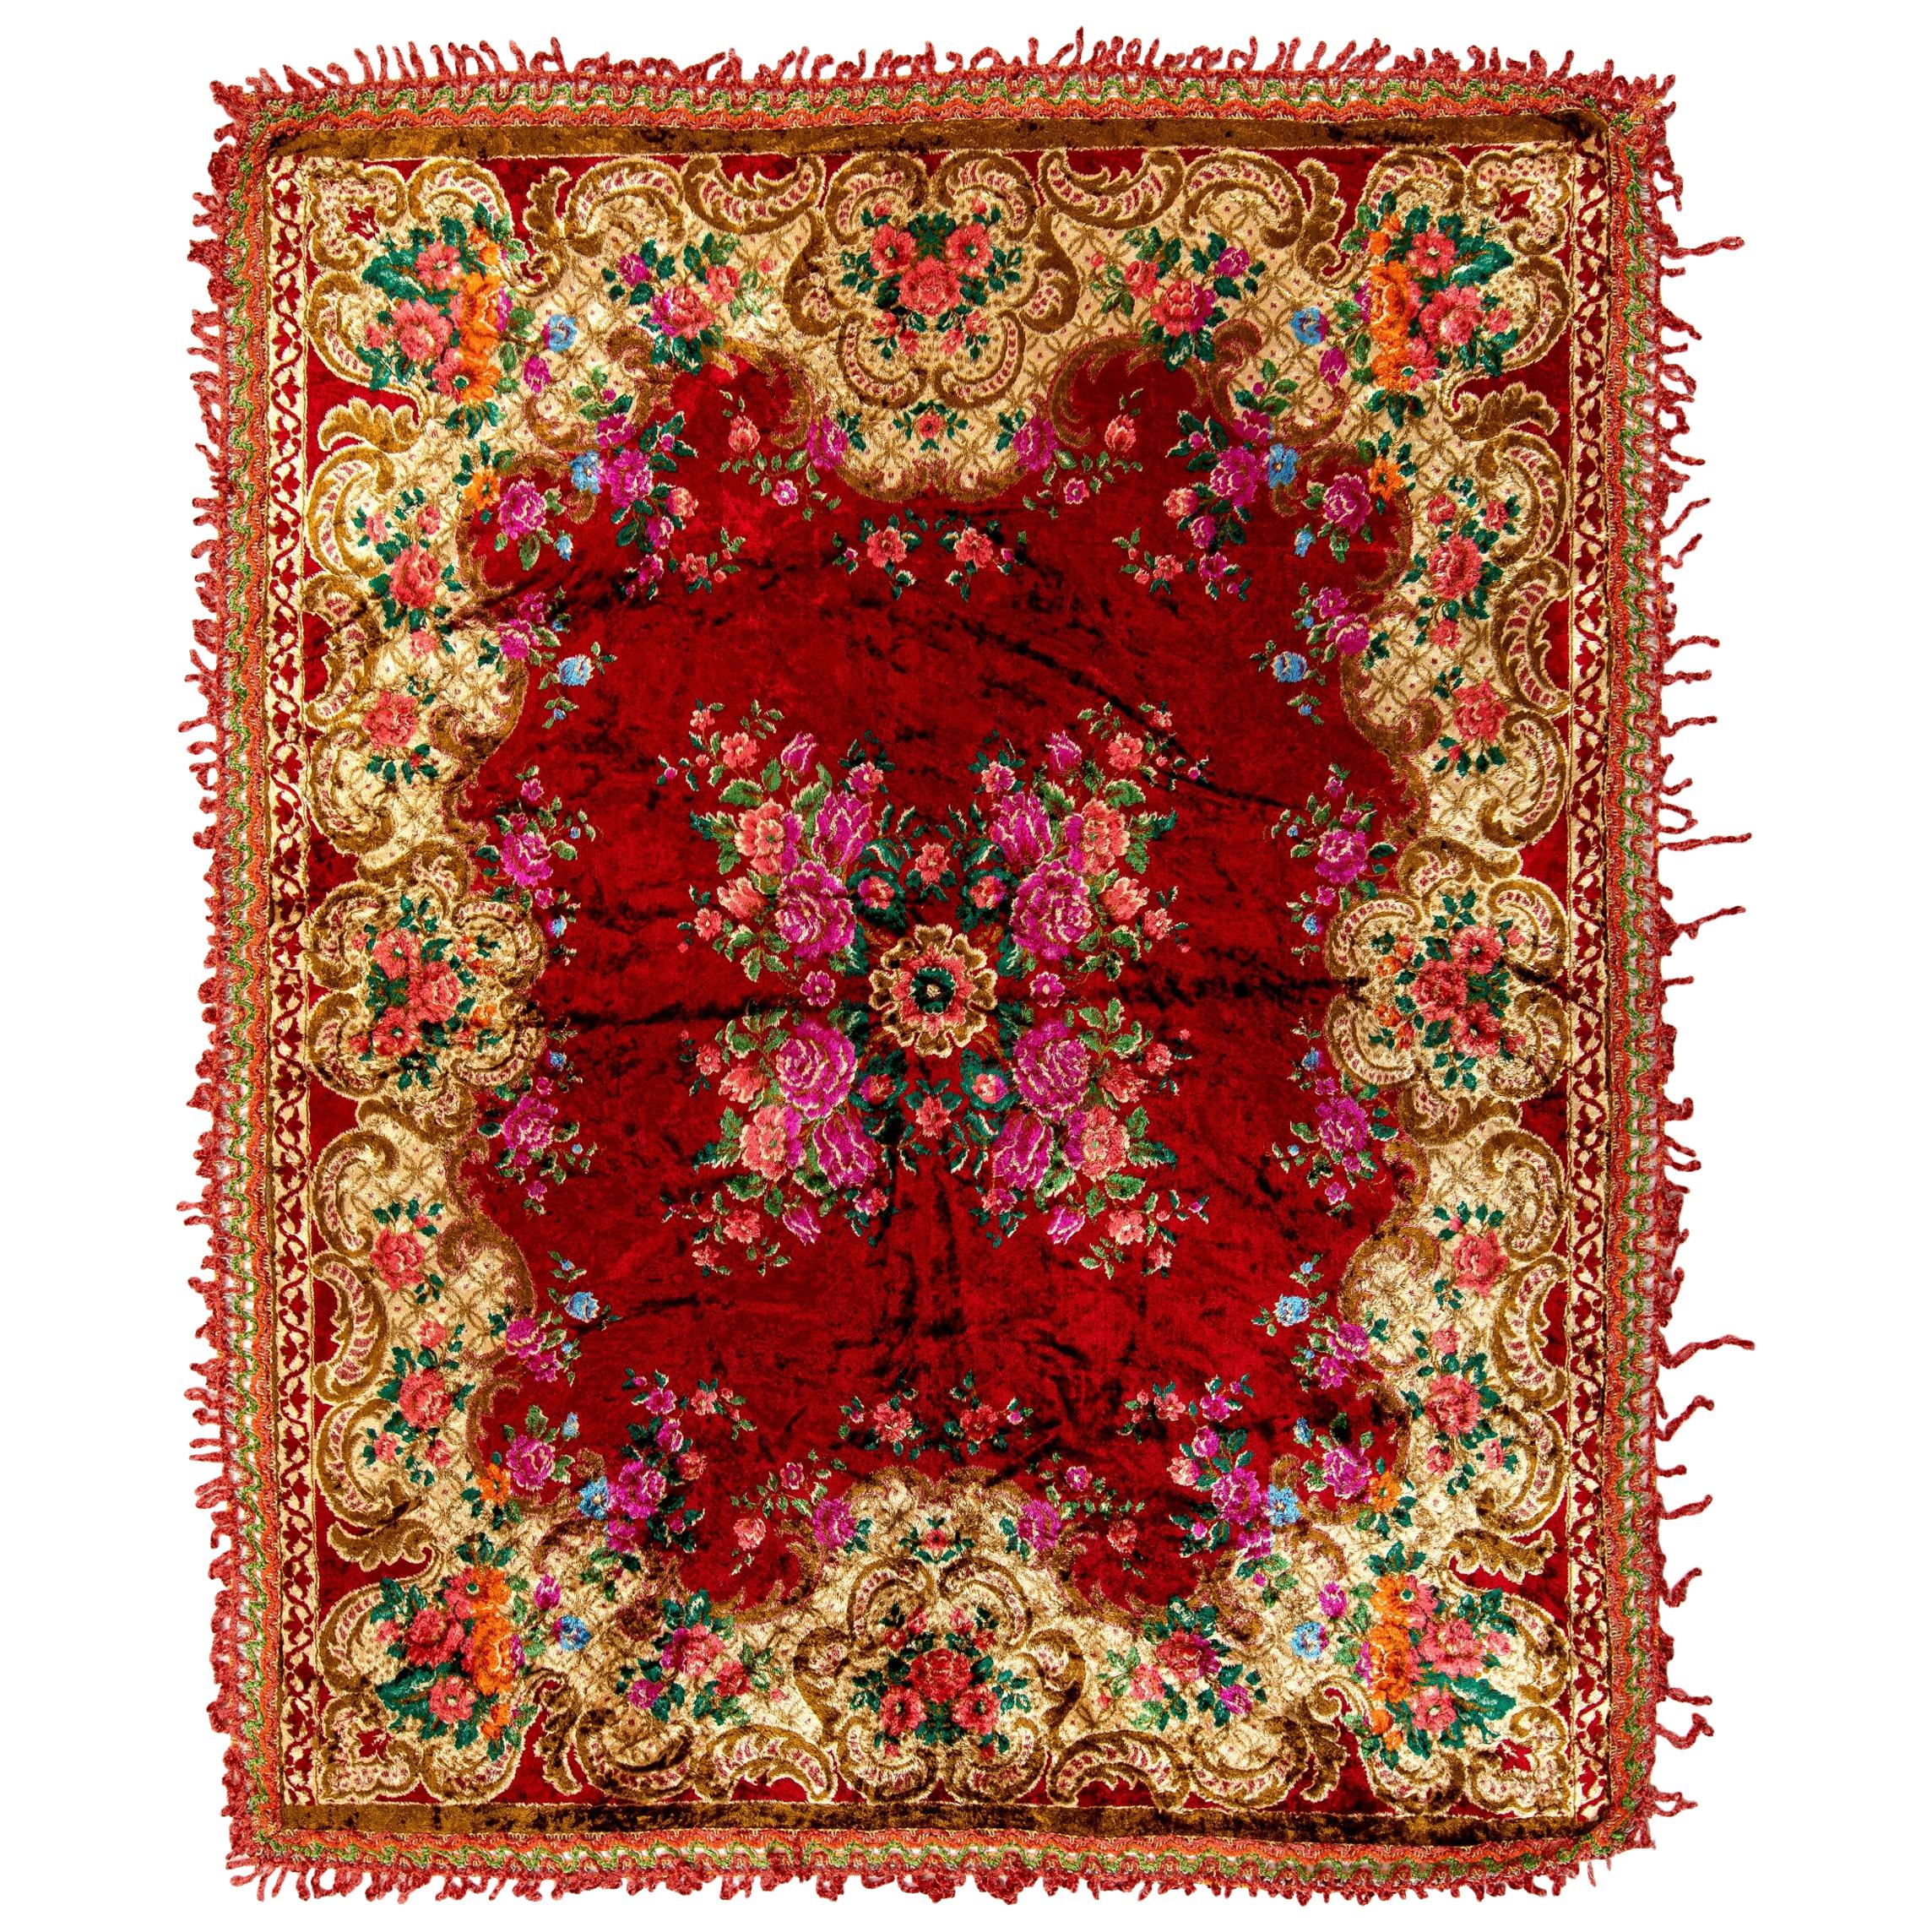 6.3x7.6 Ft Vintage Floral Moldovan Velvet Table Cover with Crochet Border